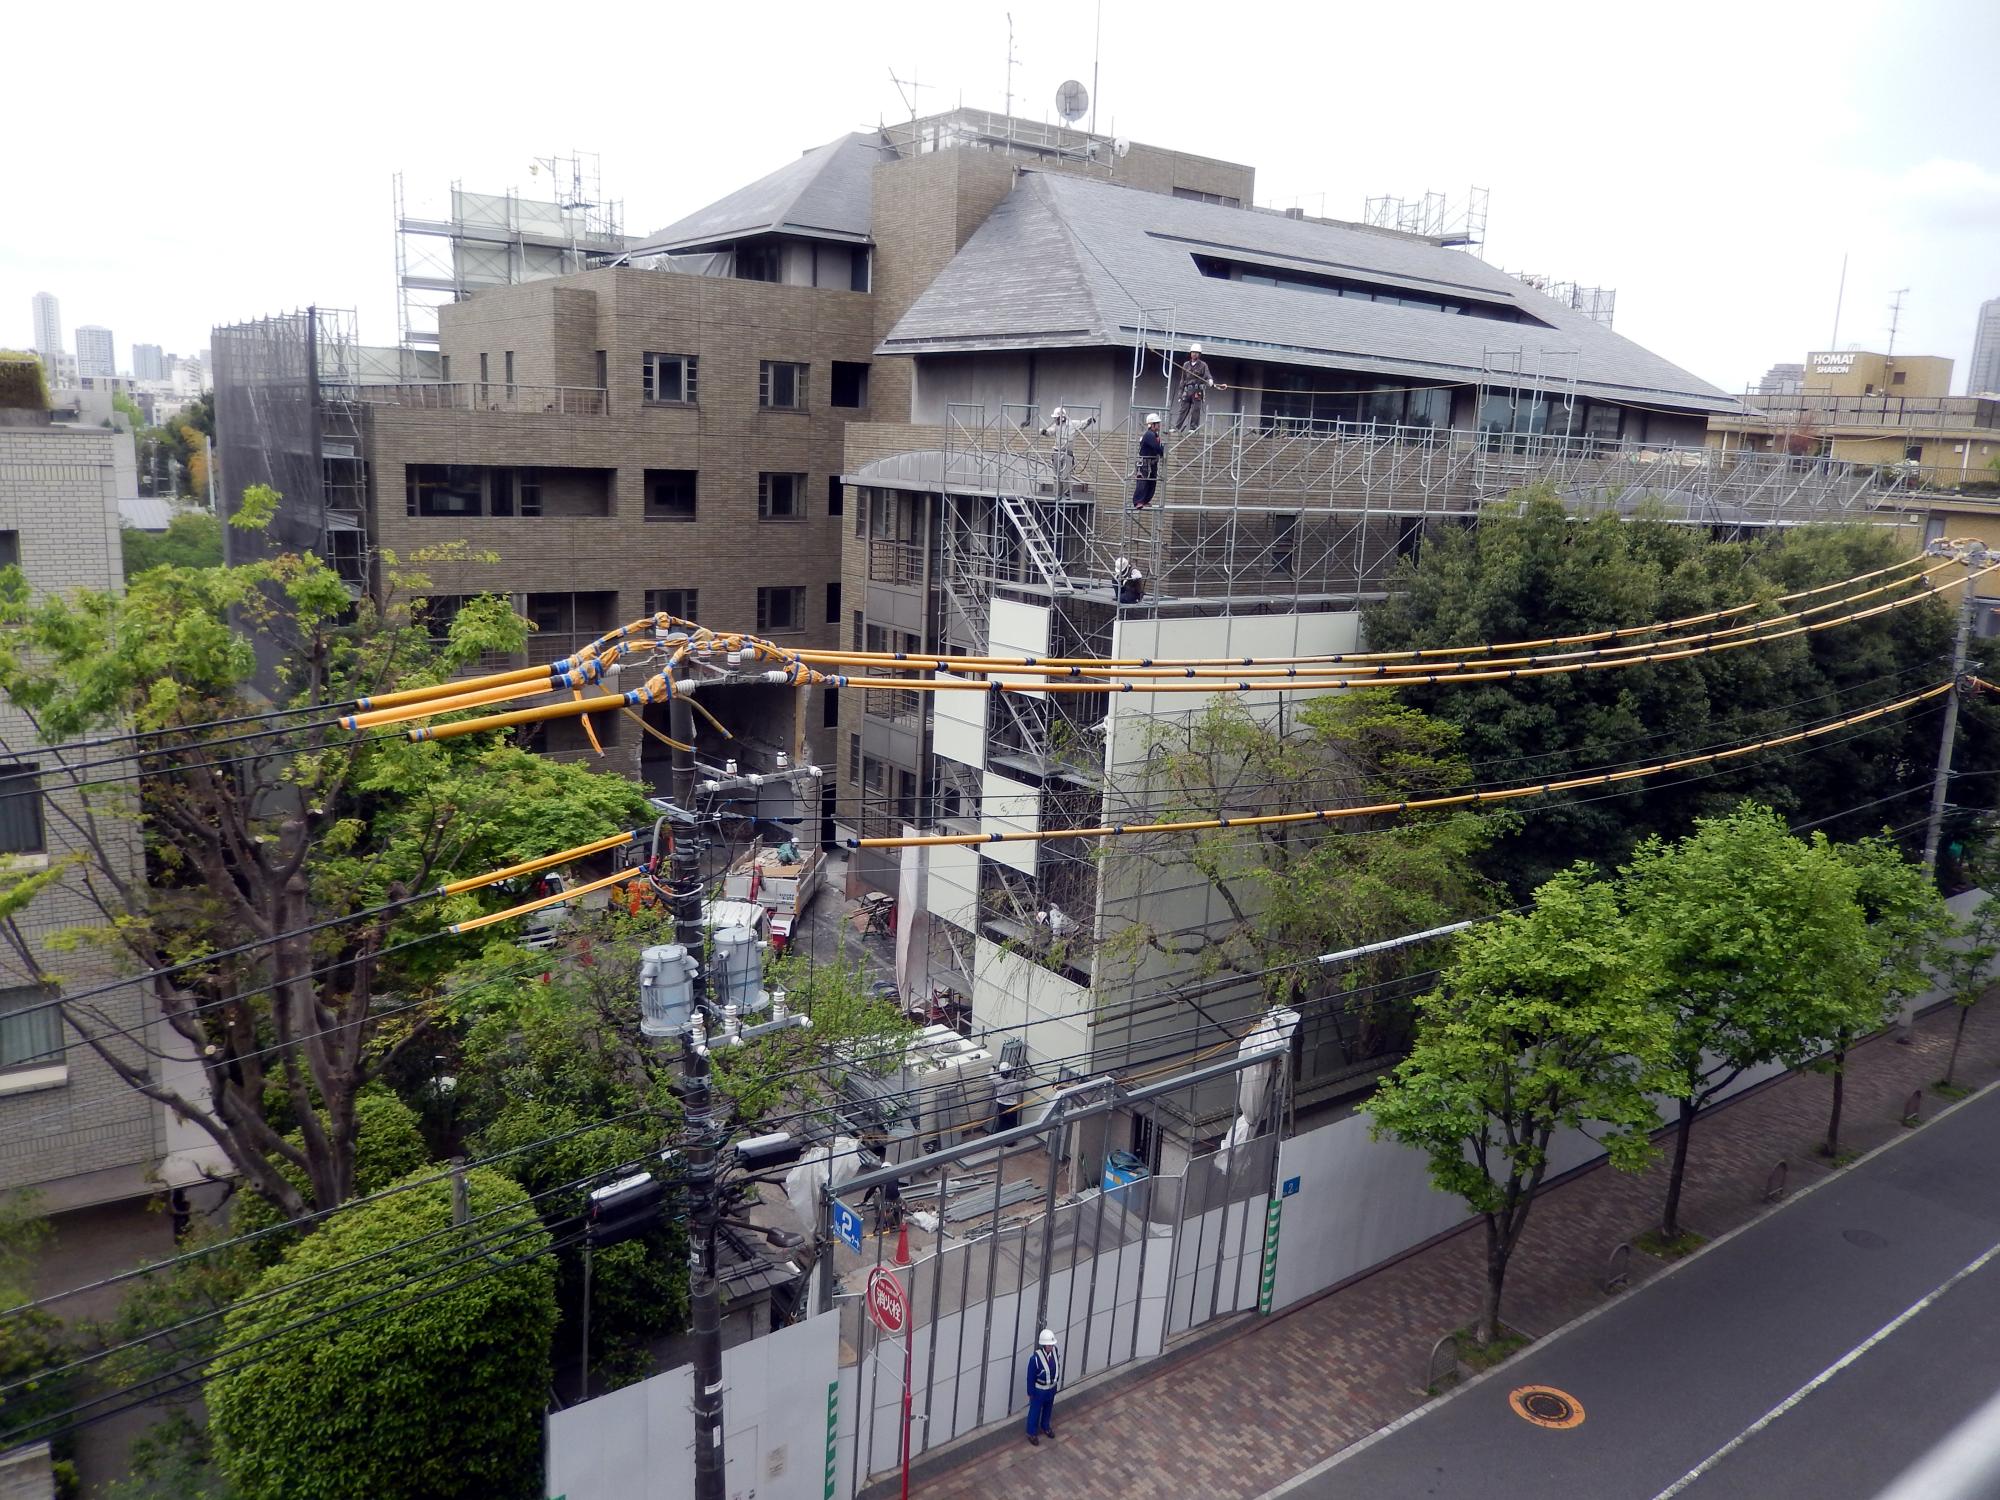 Tokyo (2016) - Demolition #1